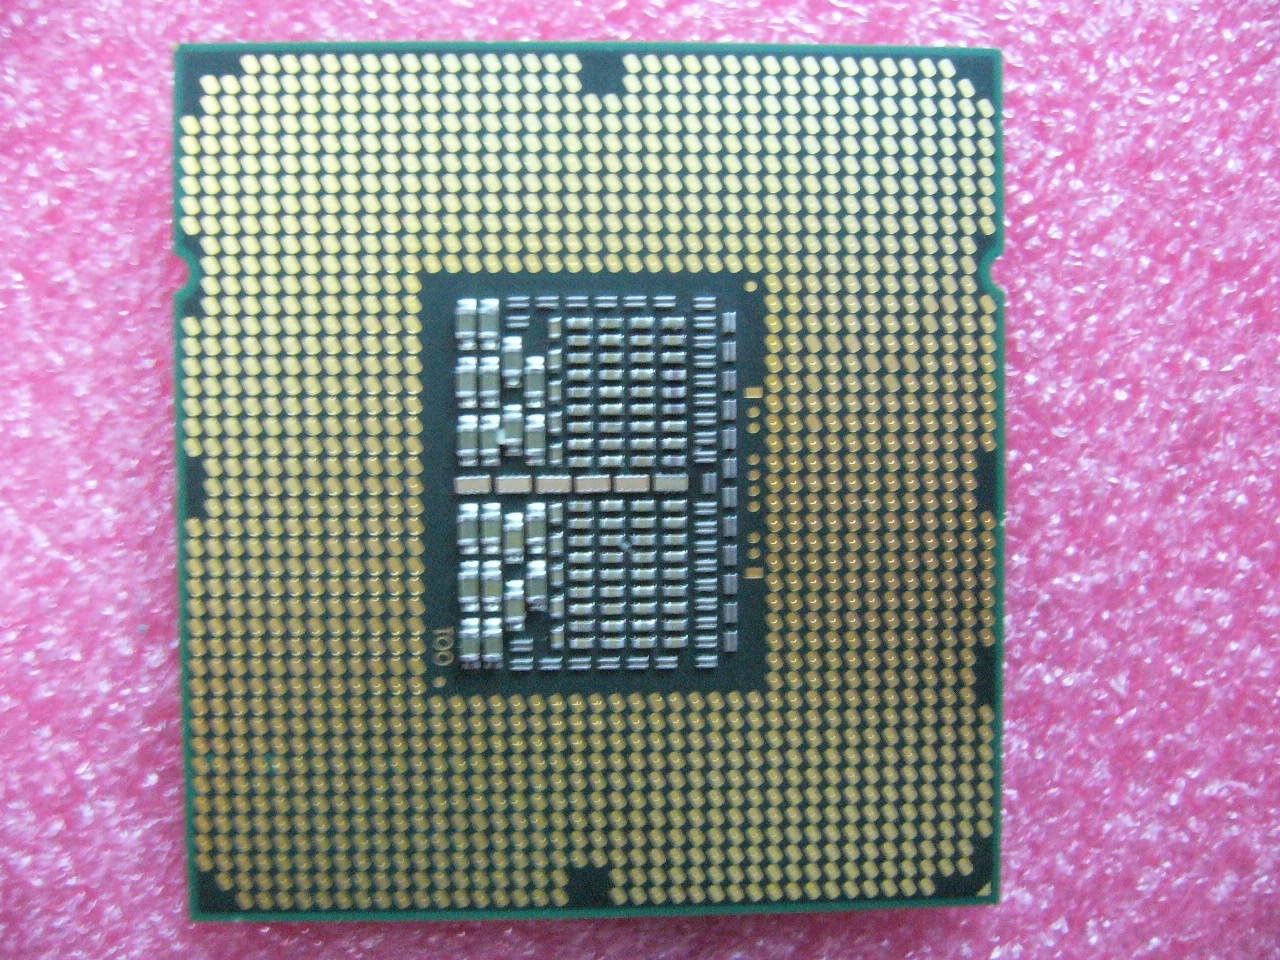 QTY 1x INTEL Quad-Cores CPU W3580 3.33GHZ/8MB LGA1366 SLBET - Click Image to Close